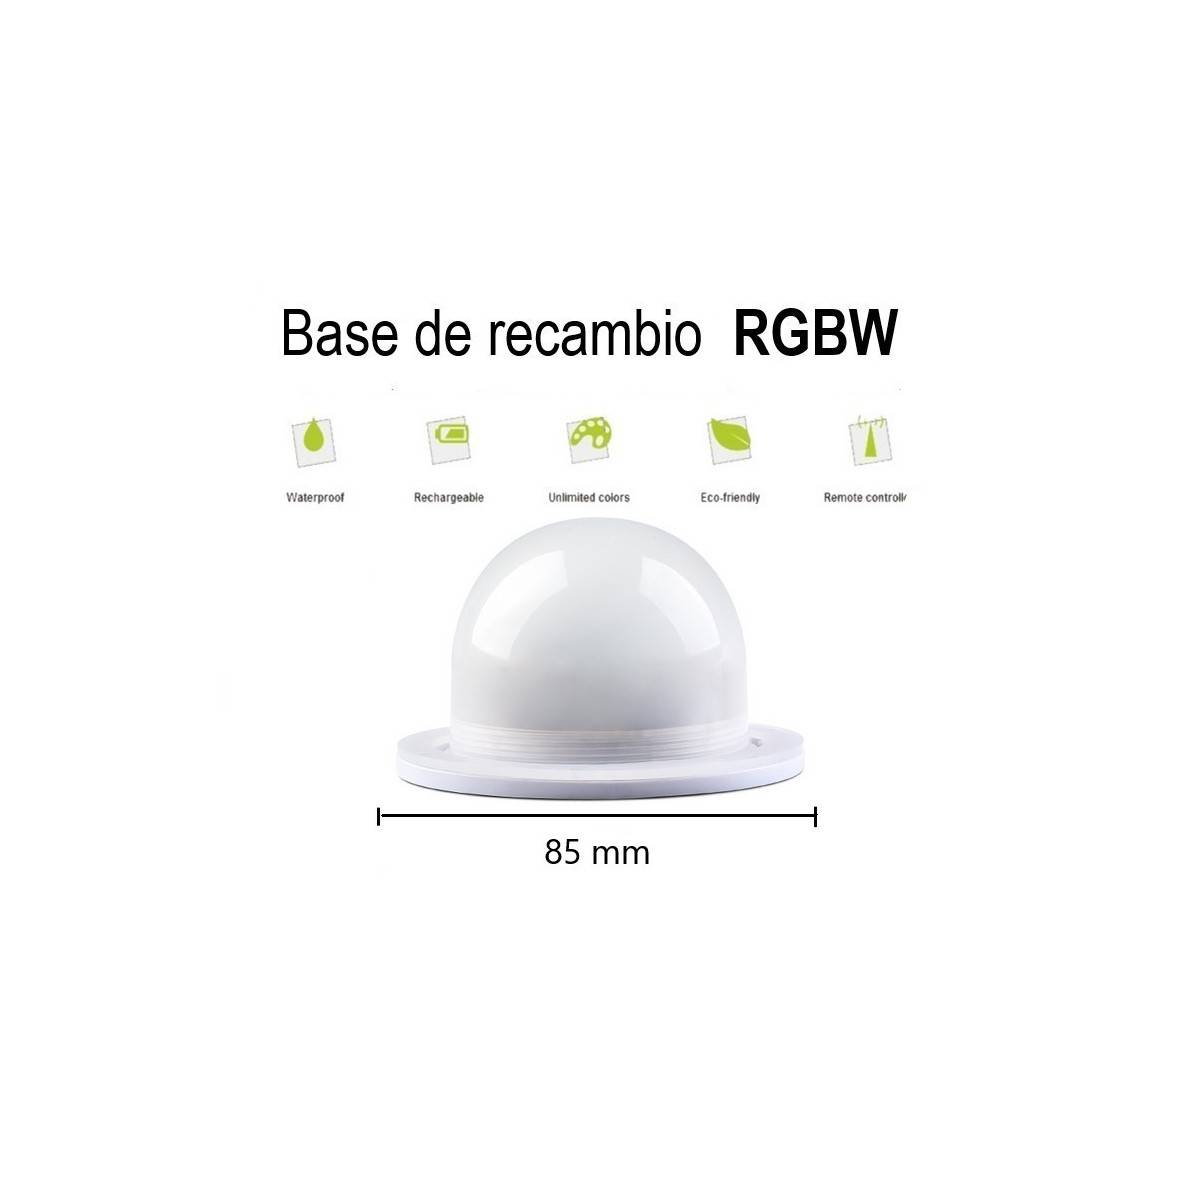 base de recambio RGBW